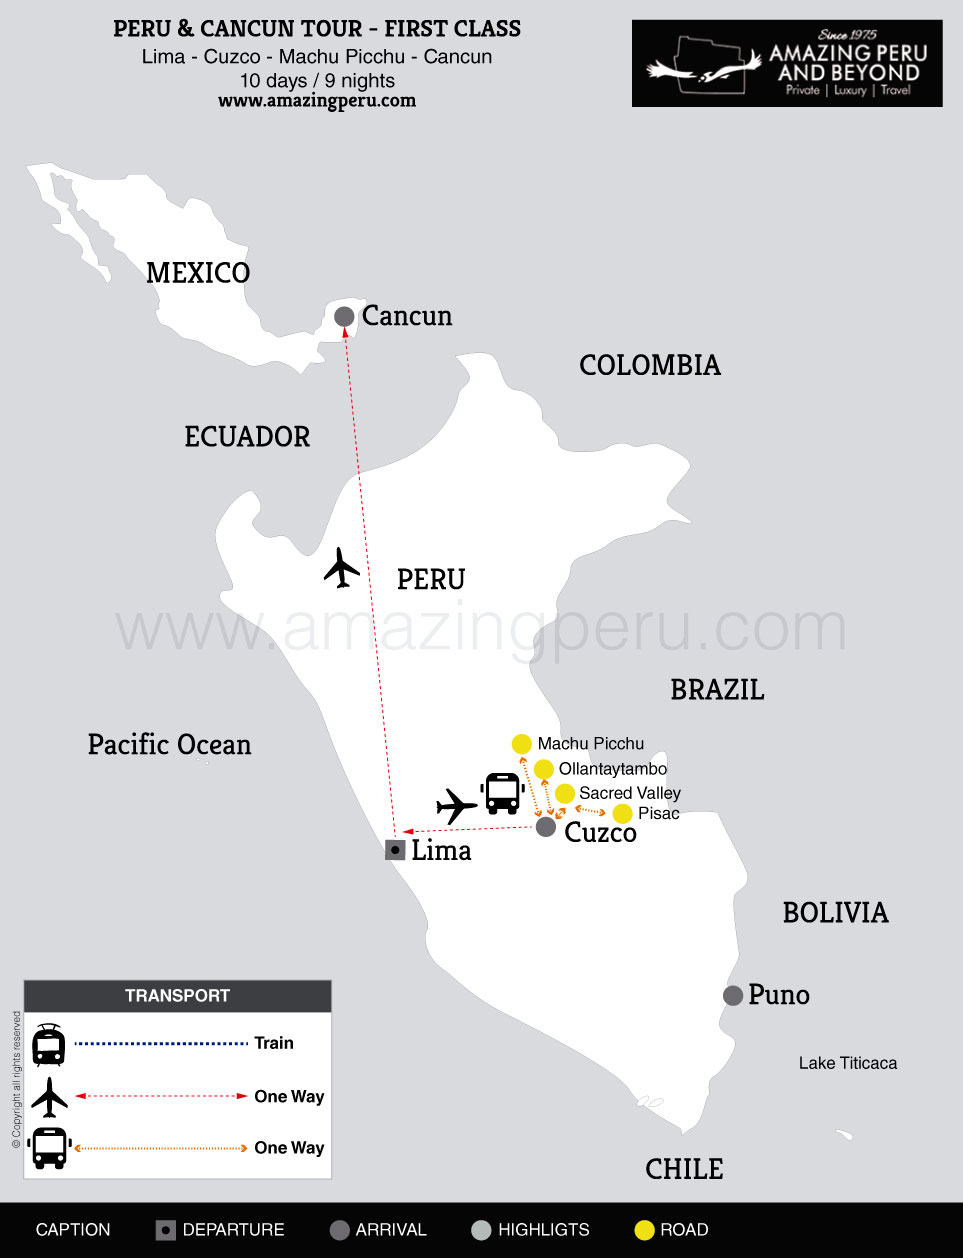 2022 Peru & Cancun Tour - First Class - 10 days / 9 nights.